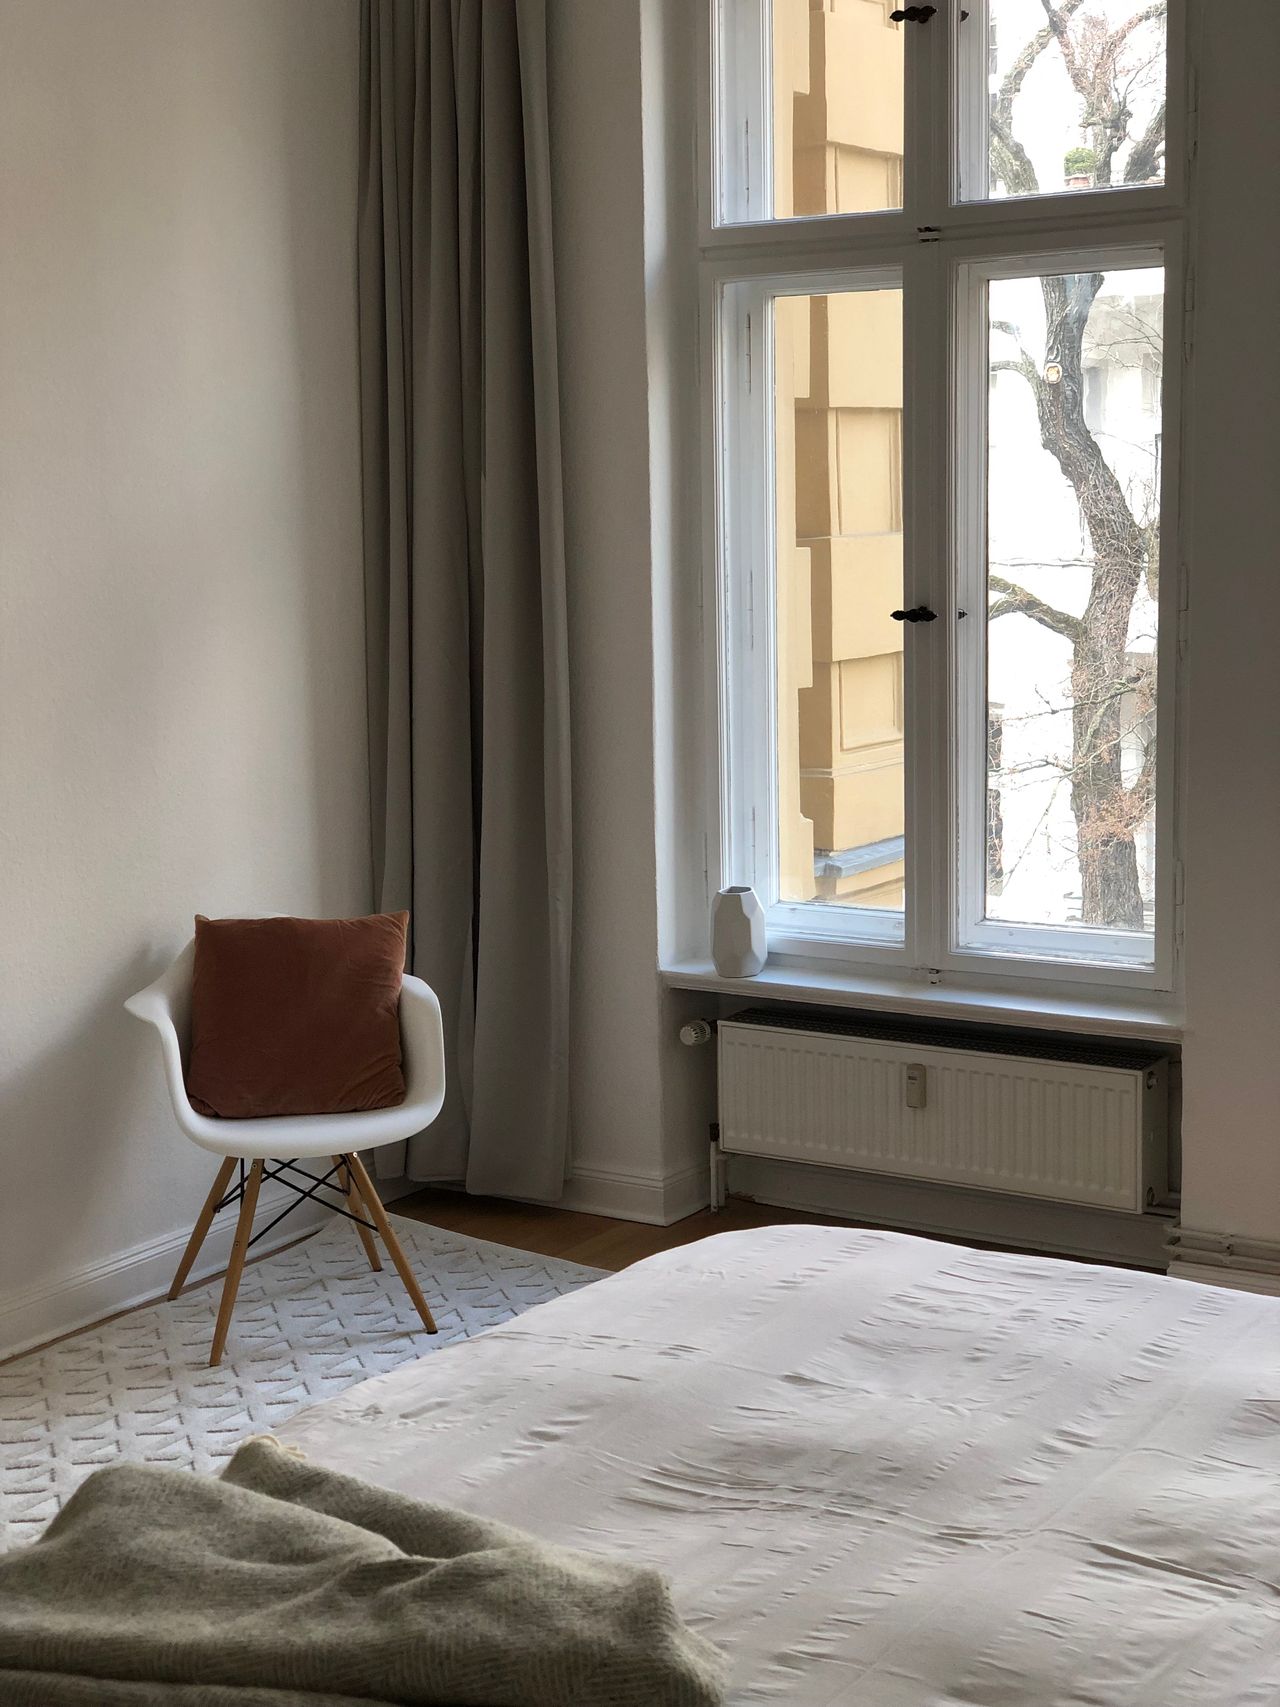 Awesome, cozy 3 room apartement in Schöneberg, Berlin